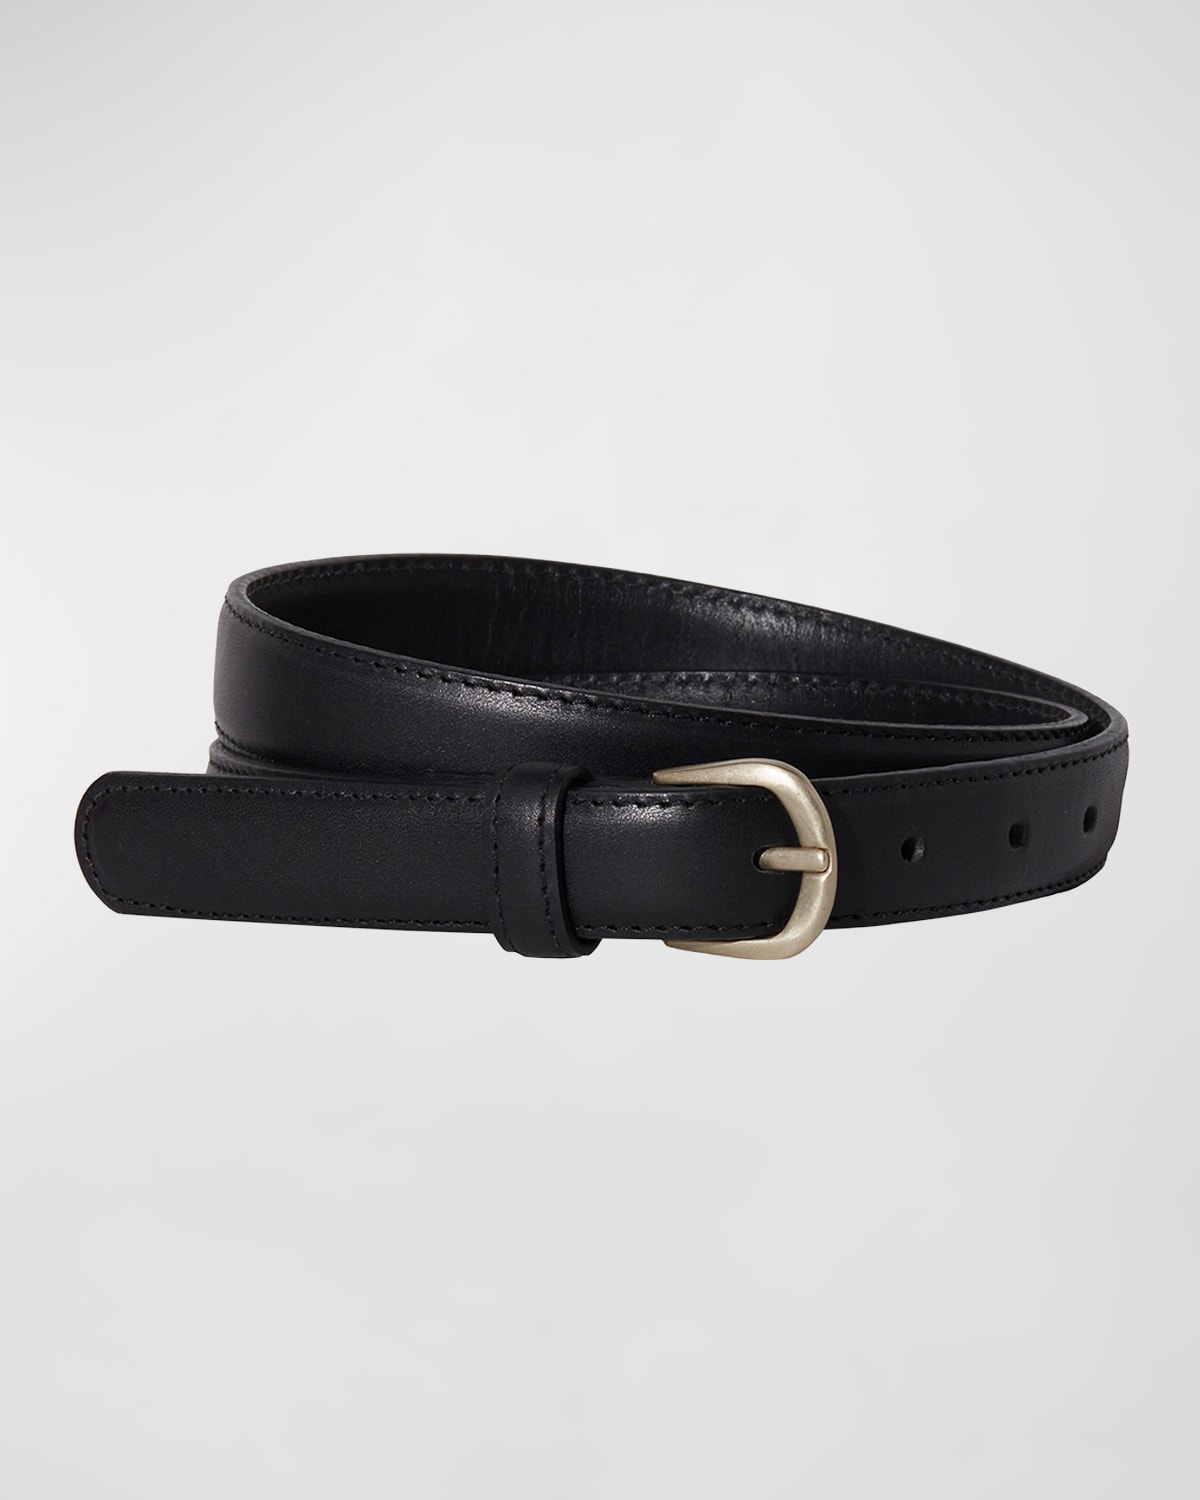 Janessa Leone Brass Buckle Leather Belt In Black